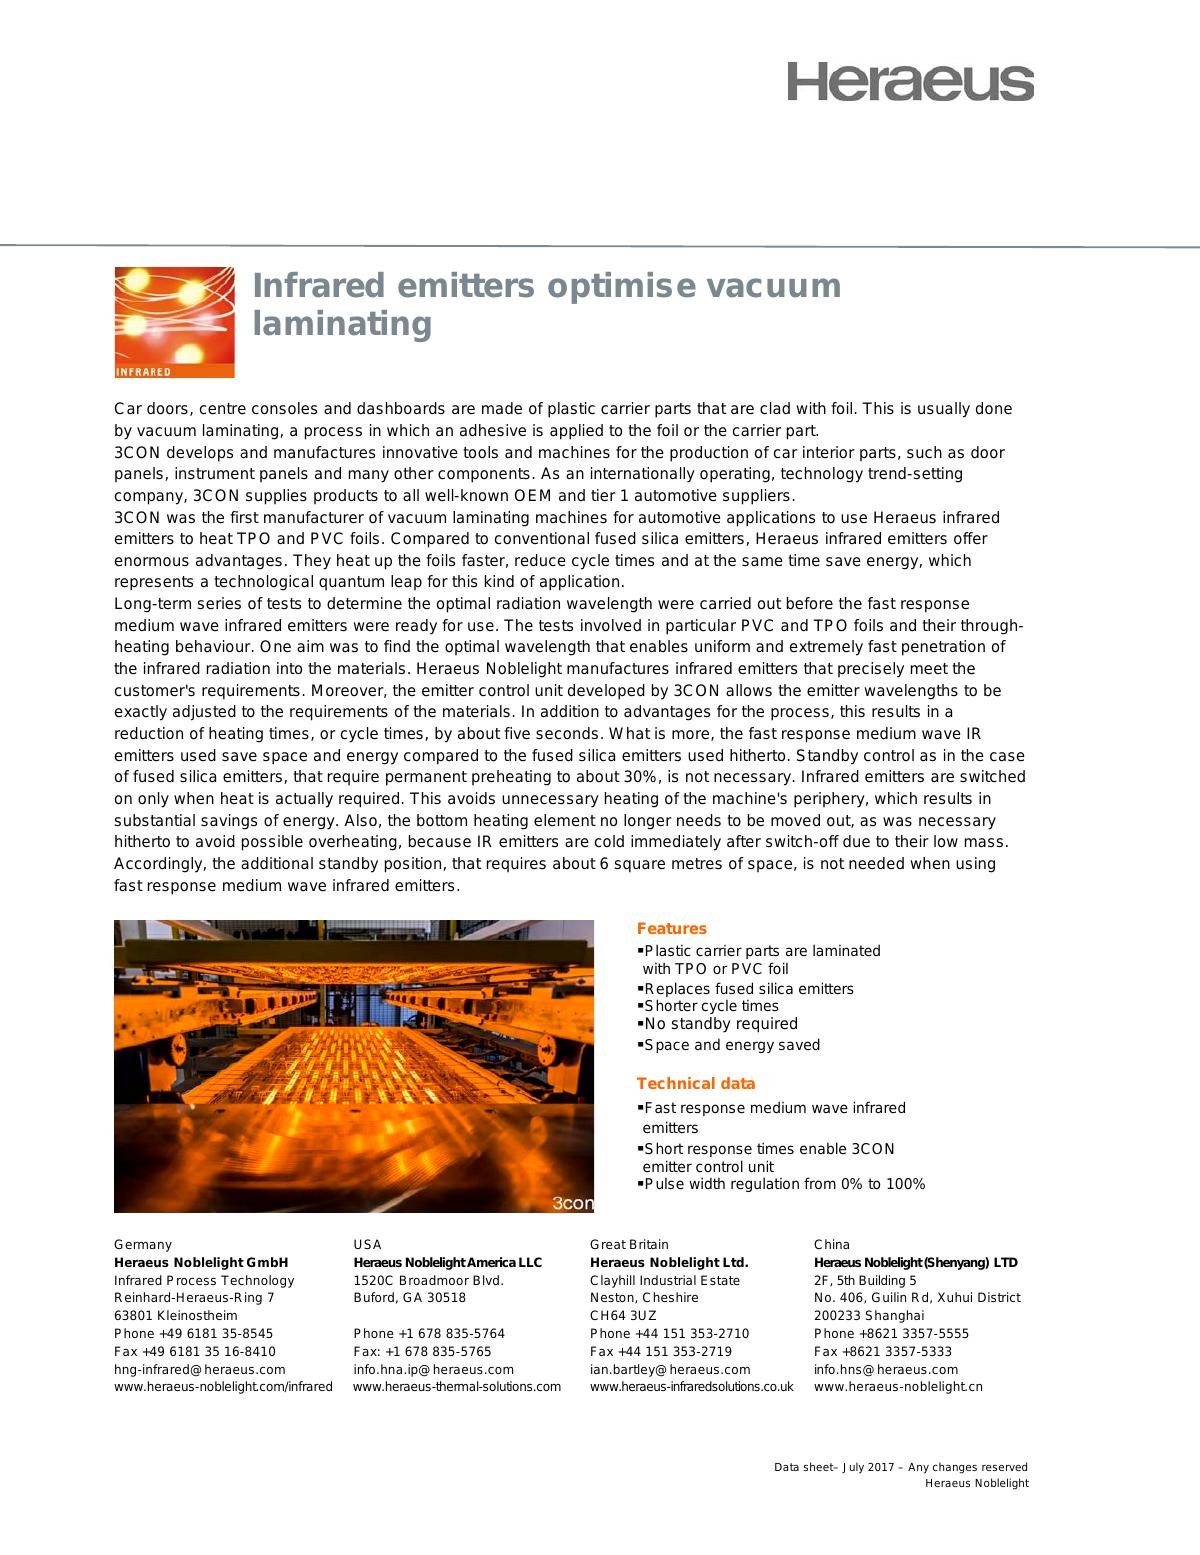 Optimizing Vacuum Laminating for Automotive Parts with Infrared